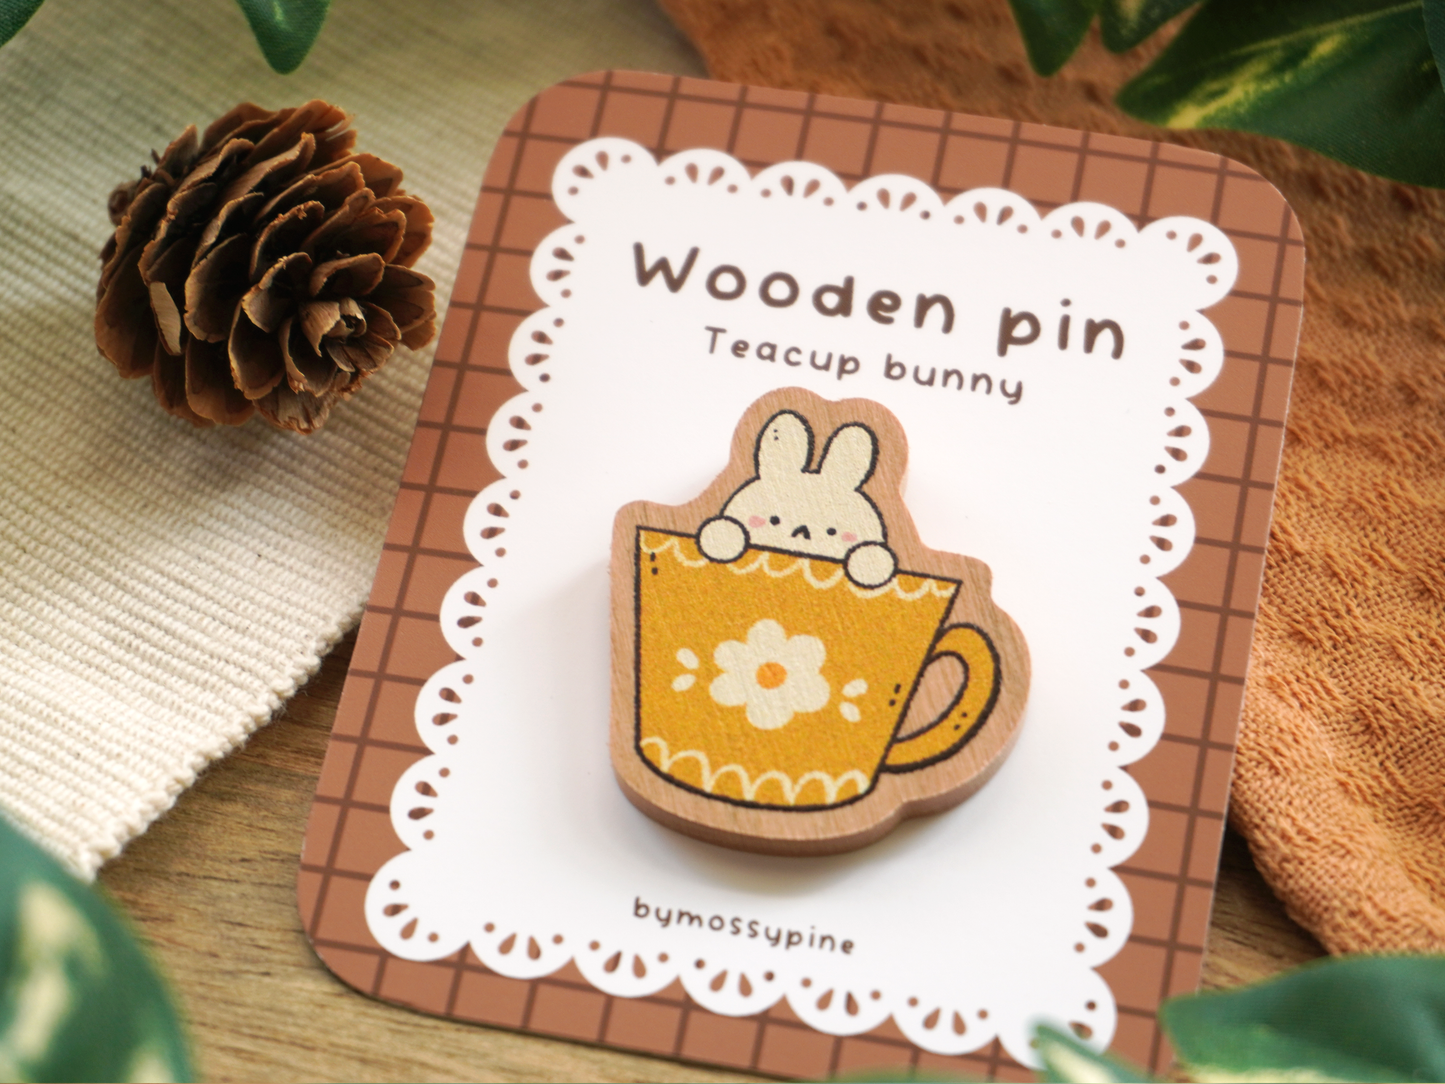 Green Teacup Bunny Wooden Pin